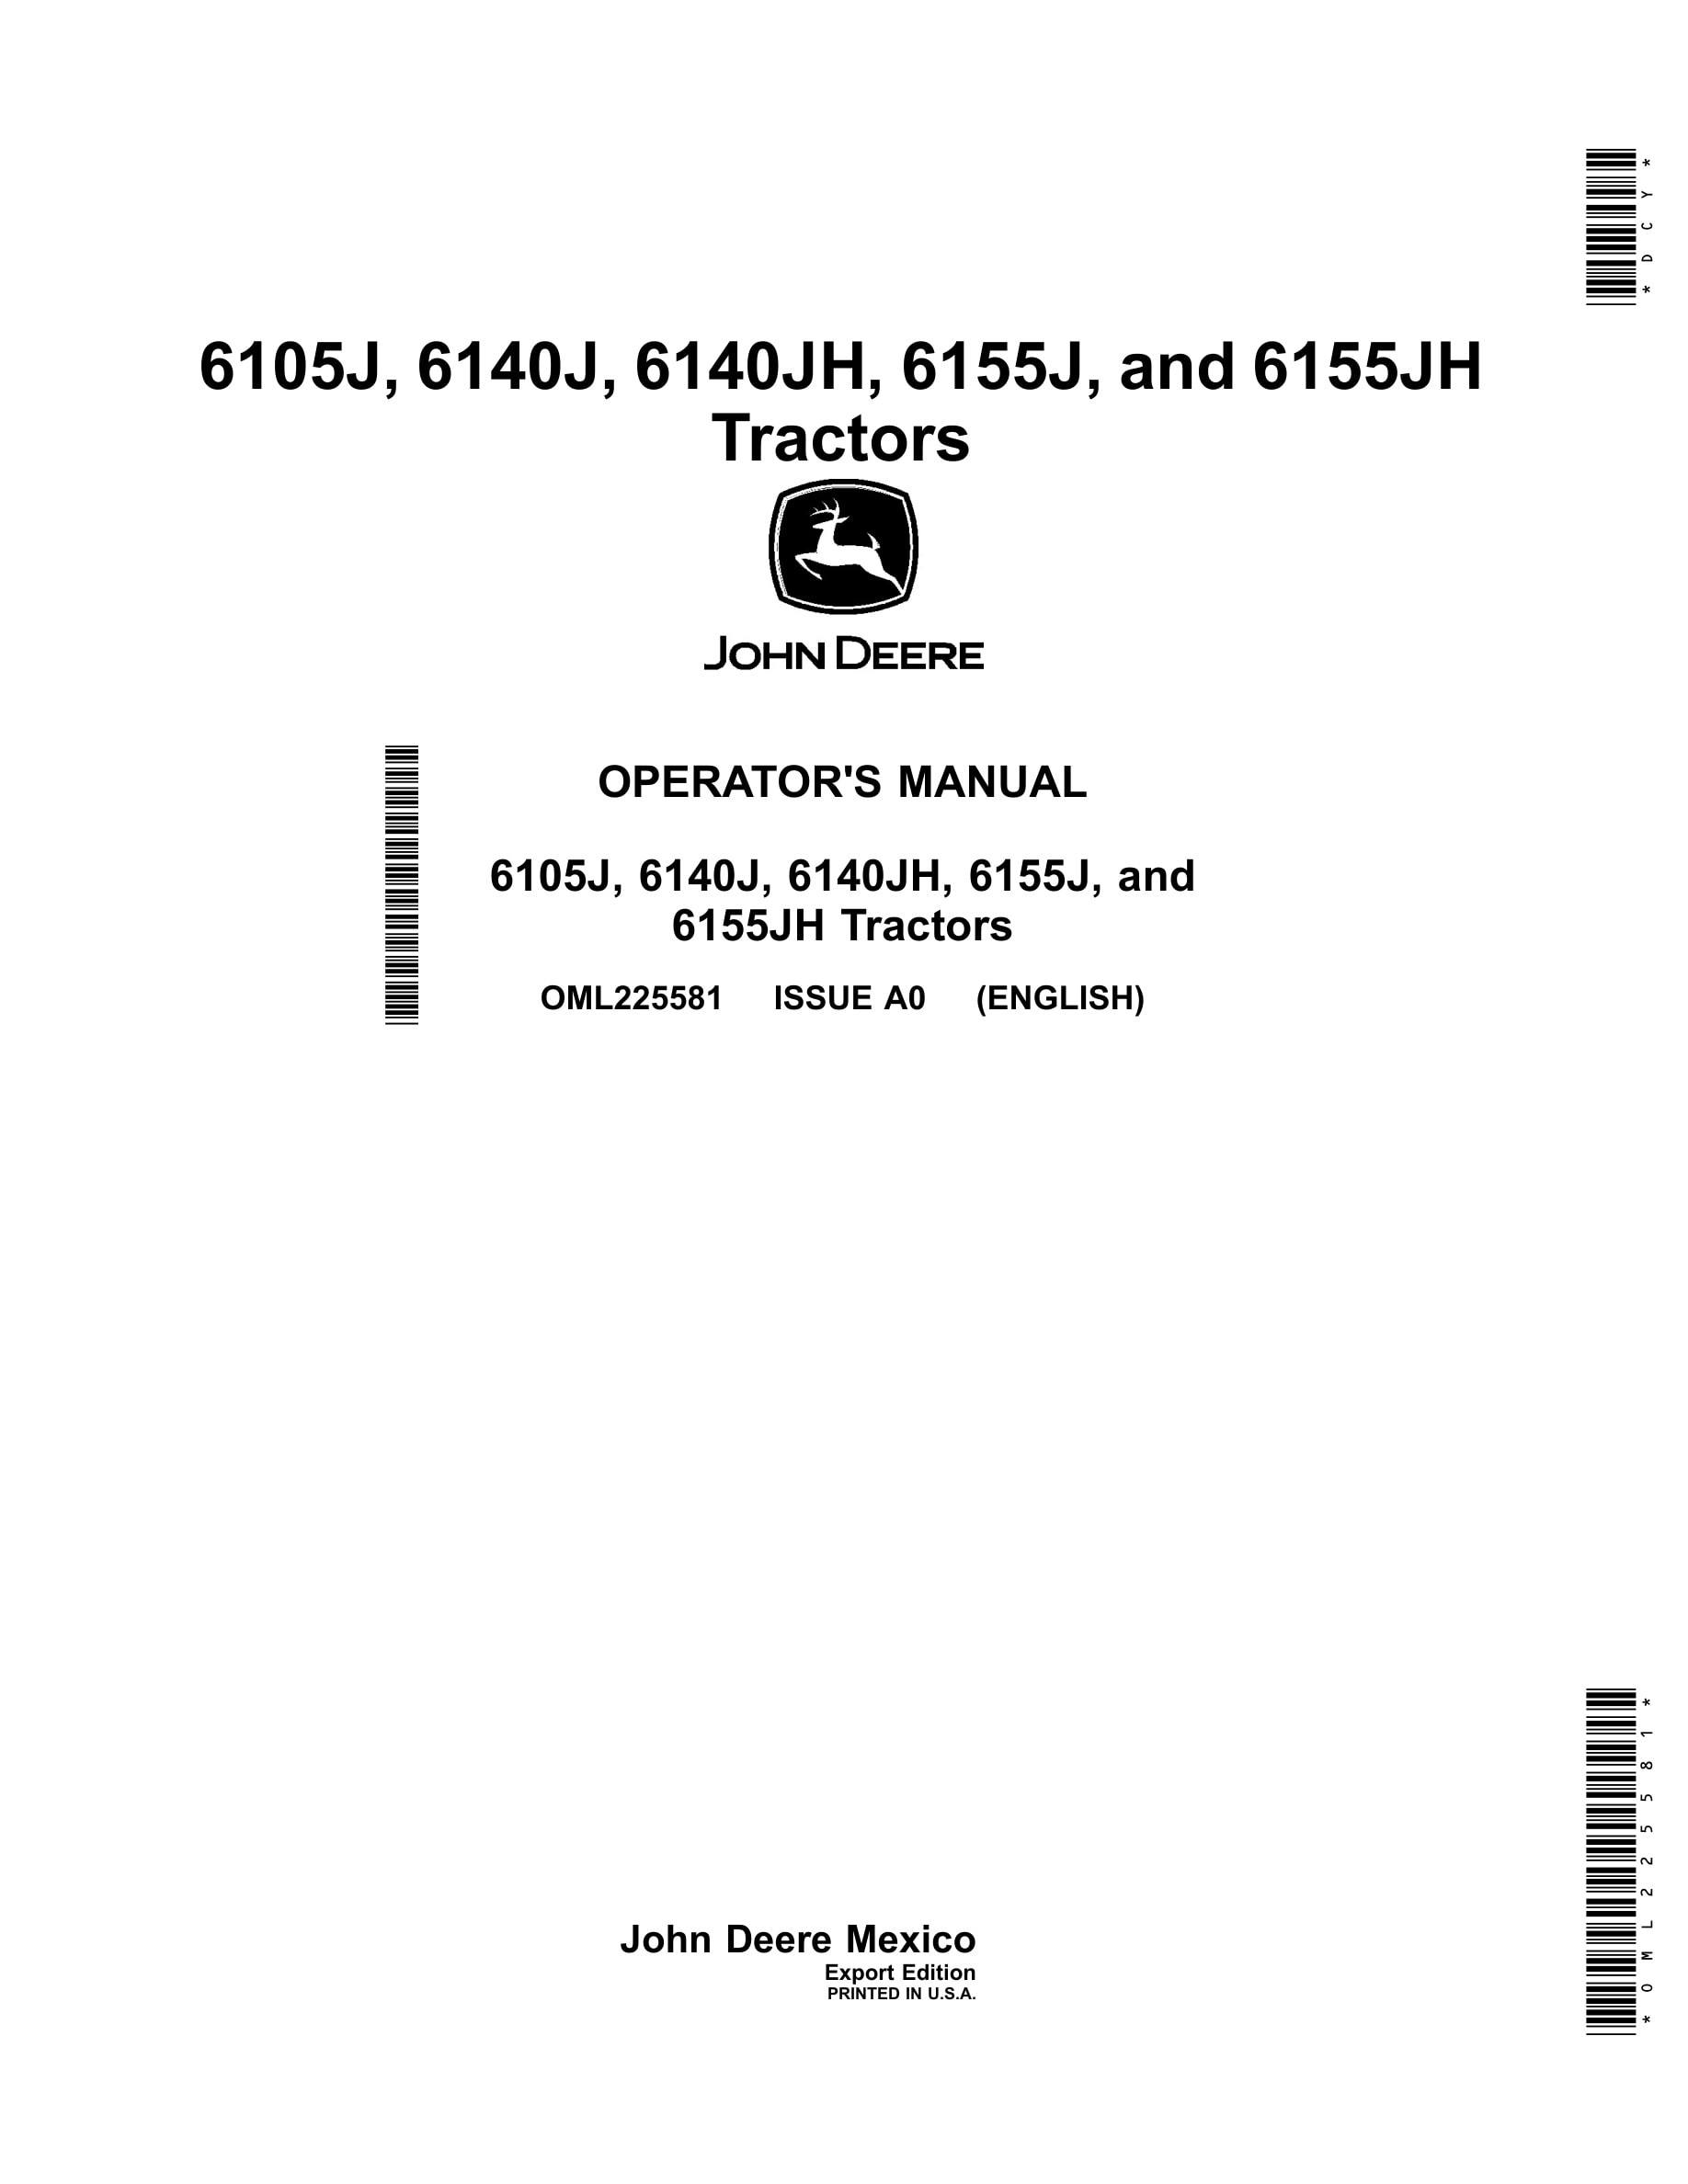 John Deere 6105j, 6140j, 6140jh, 6155j, And 6155jh Tractors Operator Manuals OML225581-1